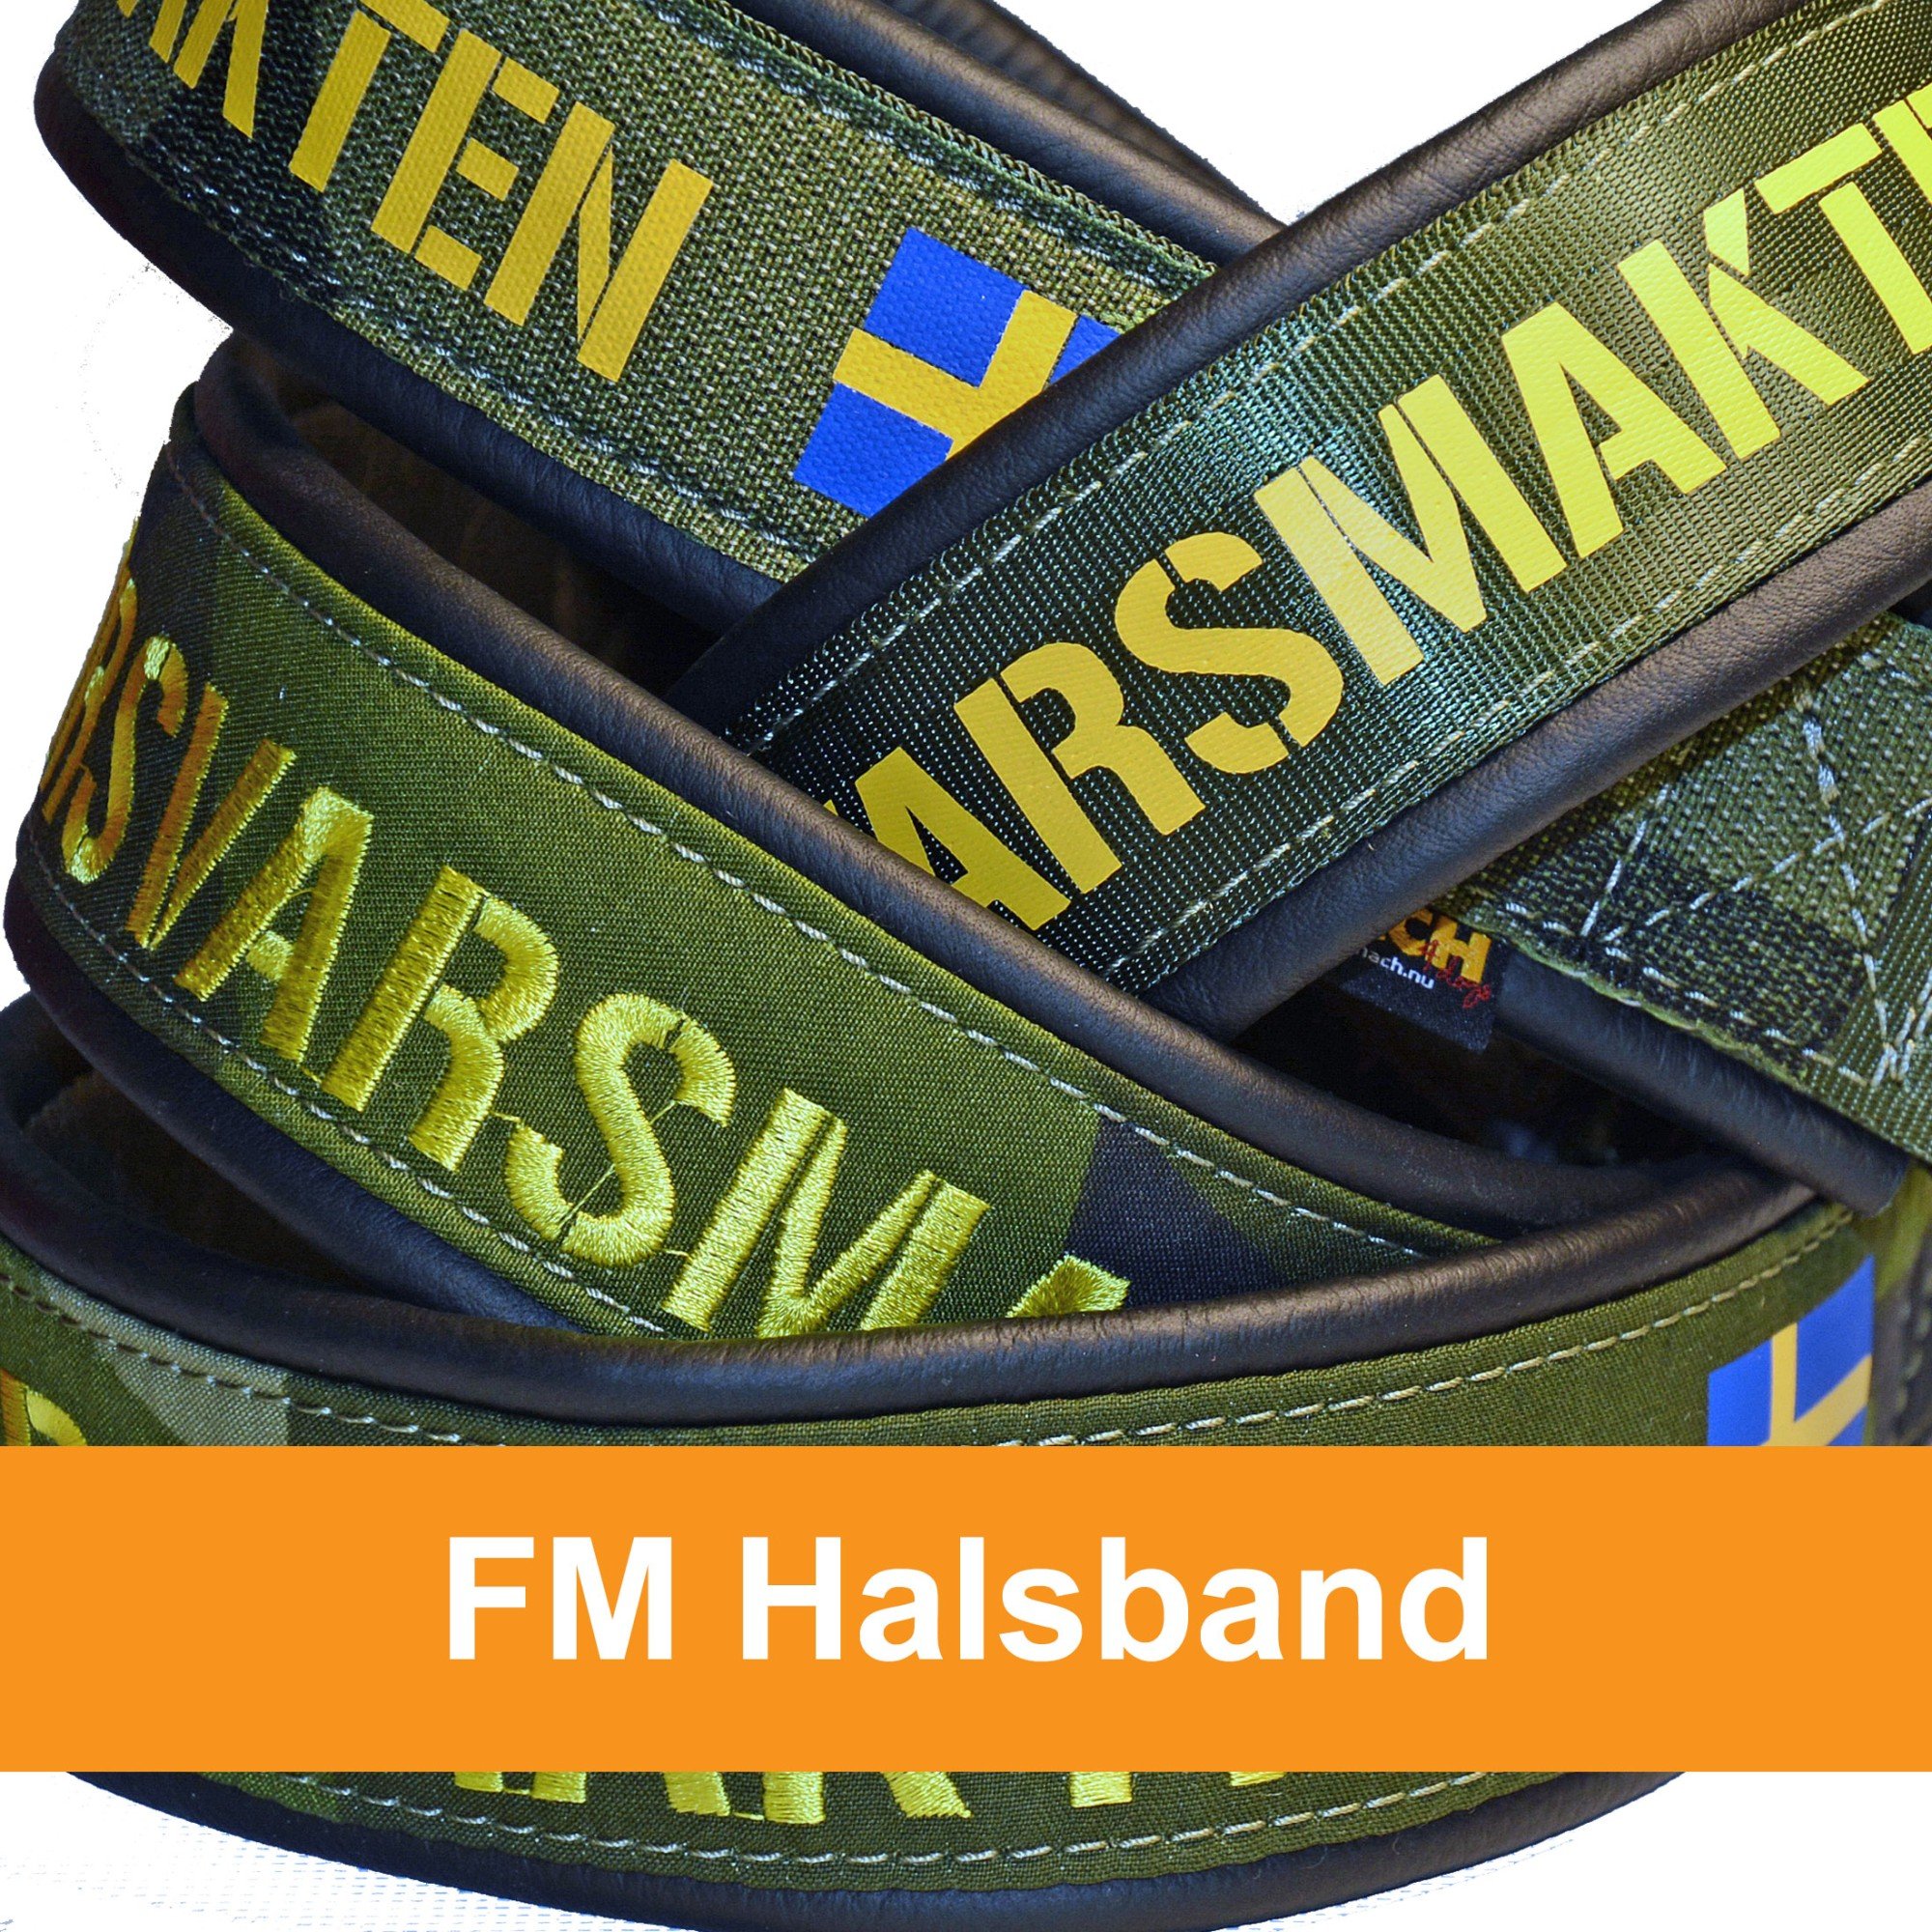 FM Halsband - MACH 4 Dogs